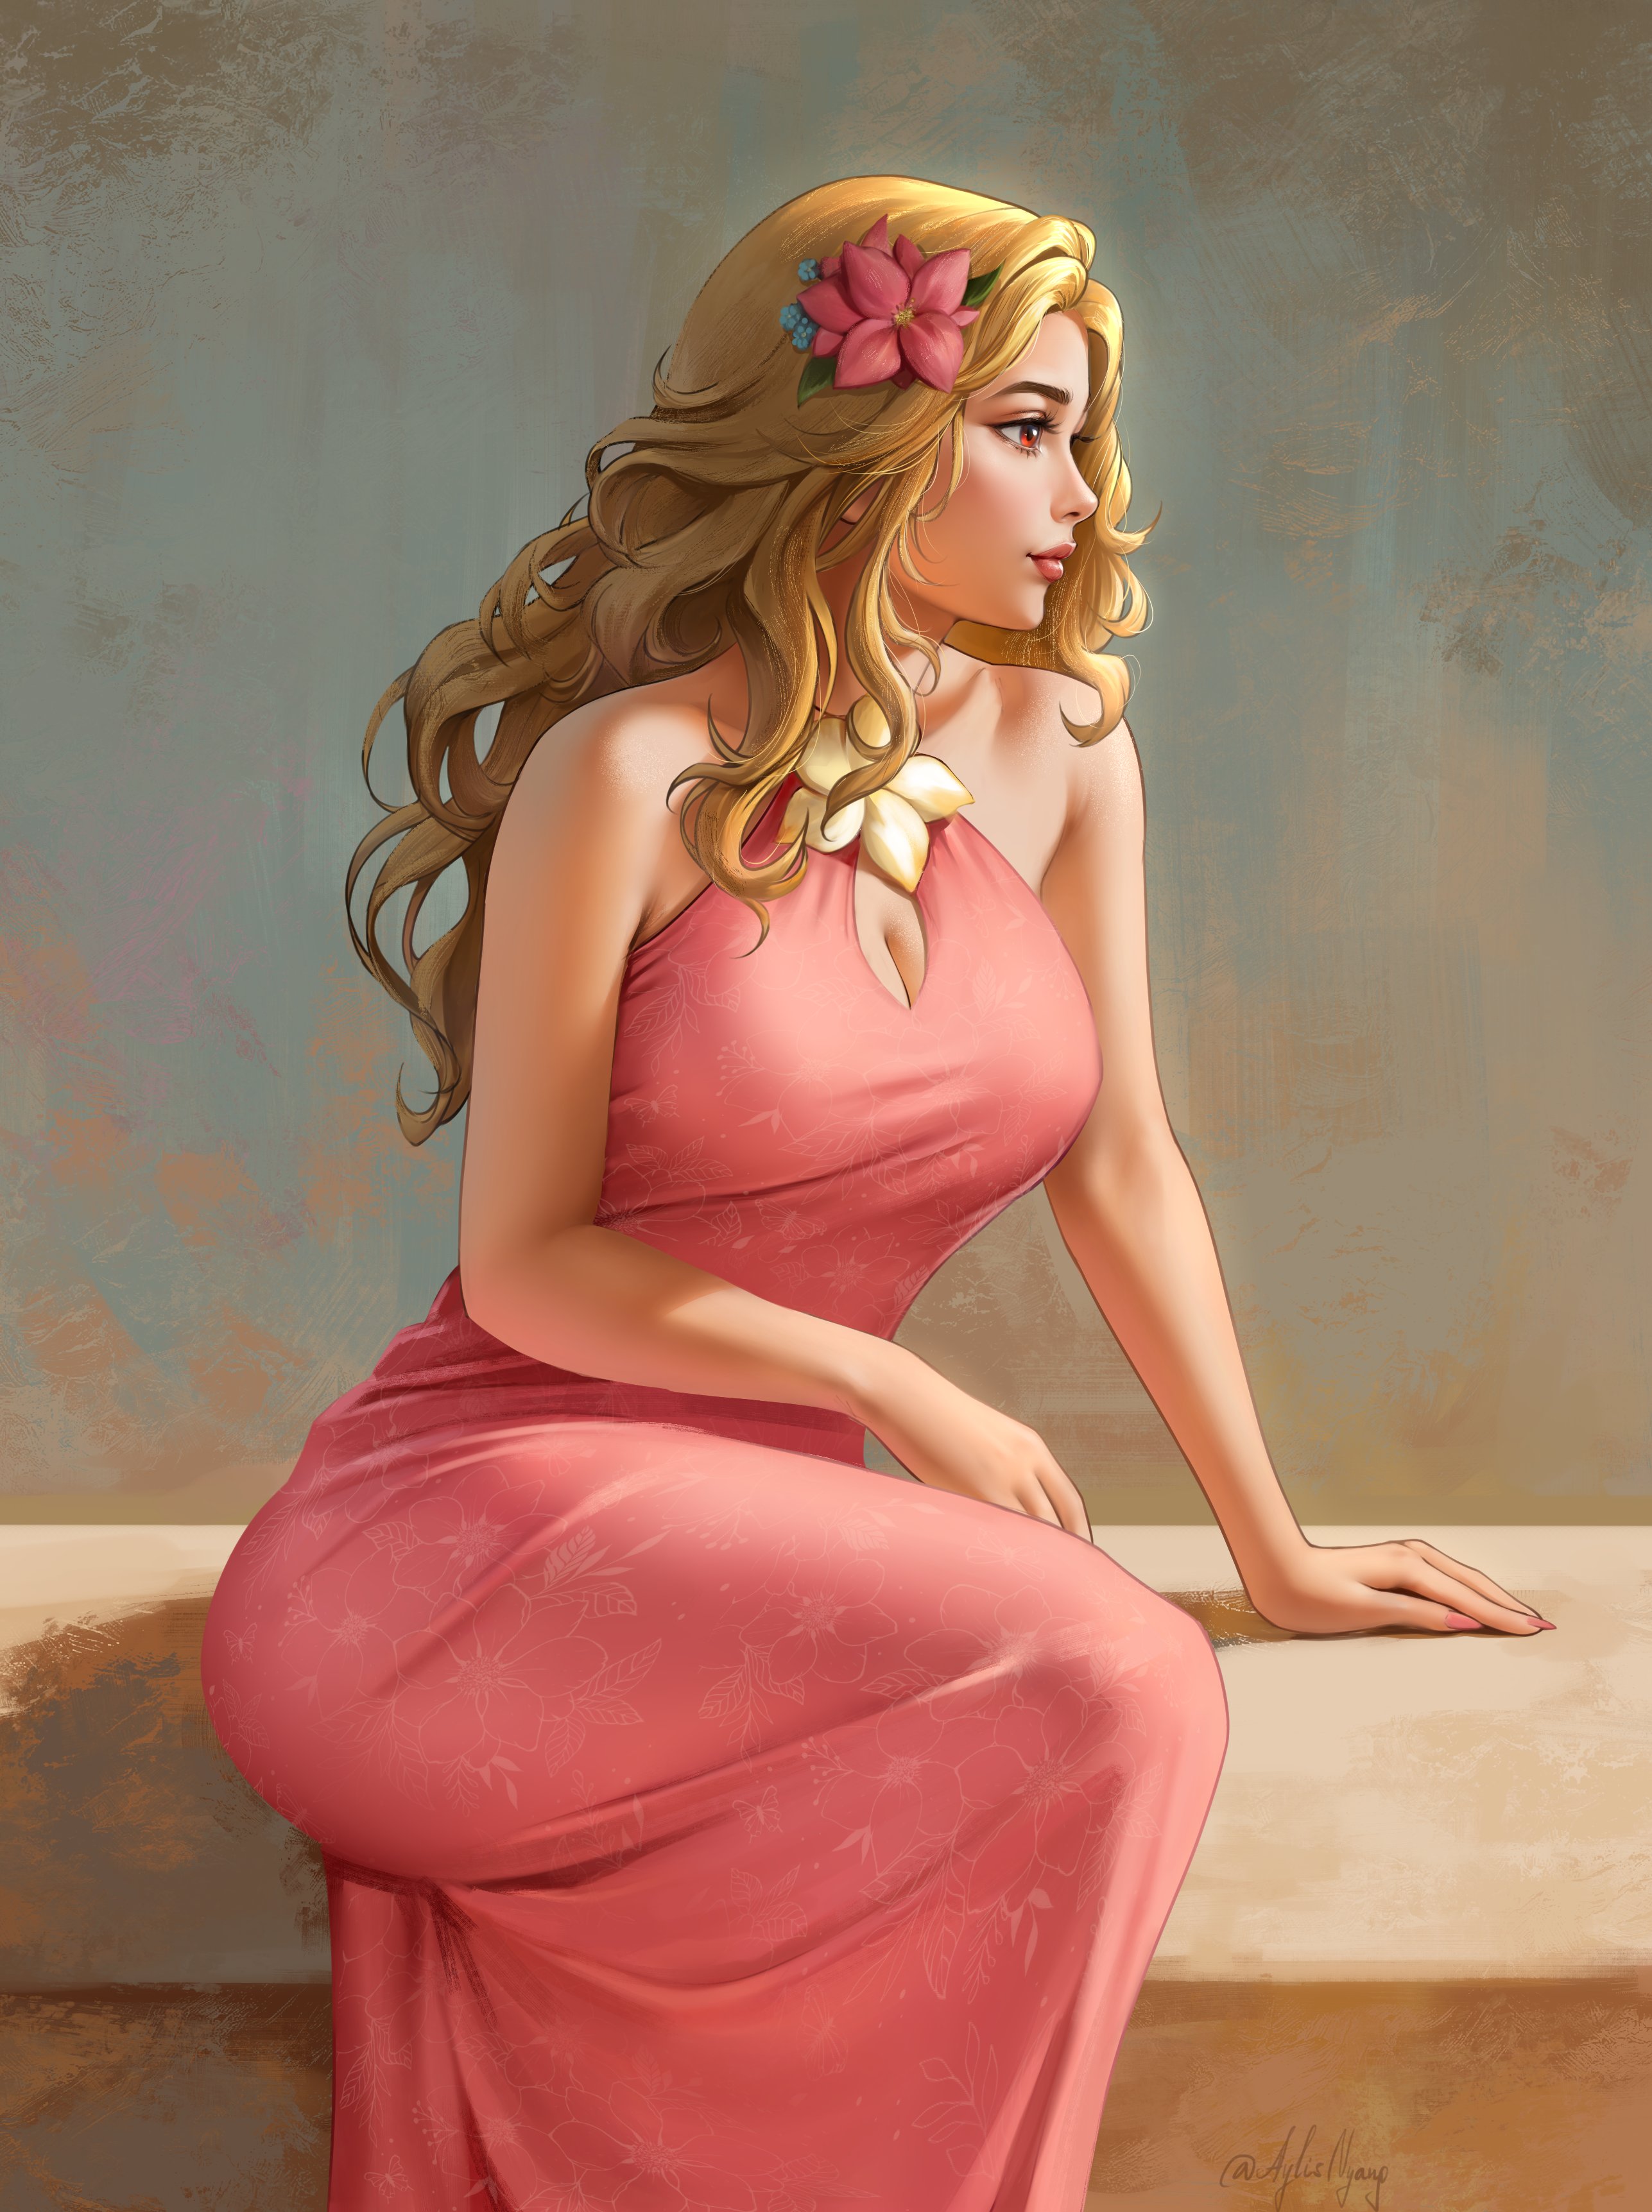 Aylis Nyang Digital Art Artwork Illustration Women Sitting Curly Hair Blonde Long Hair Looking Sidew 2574x3447